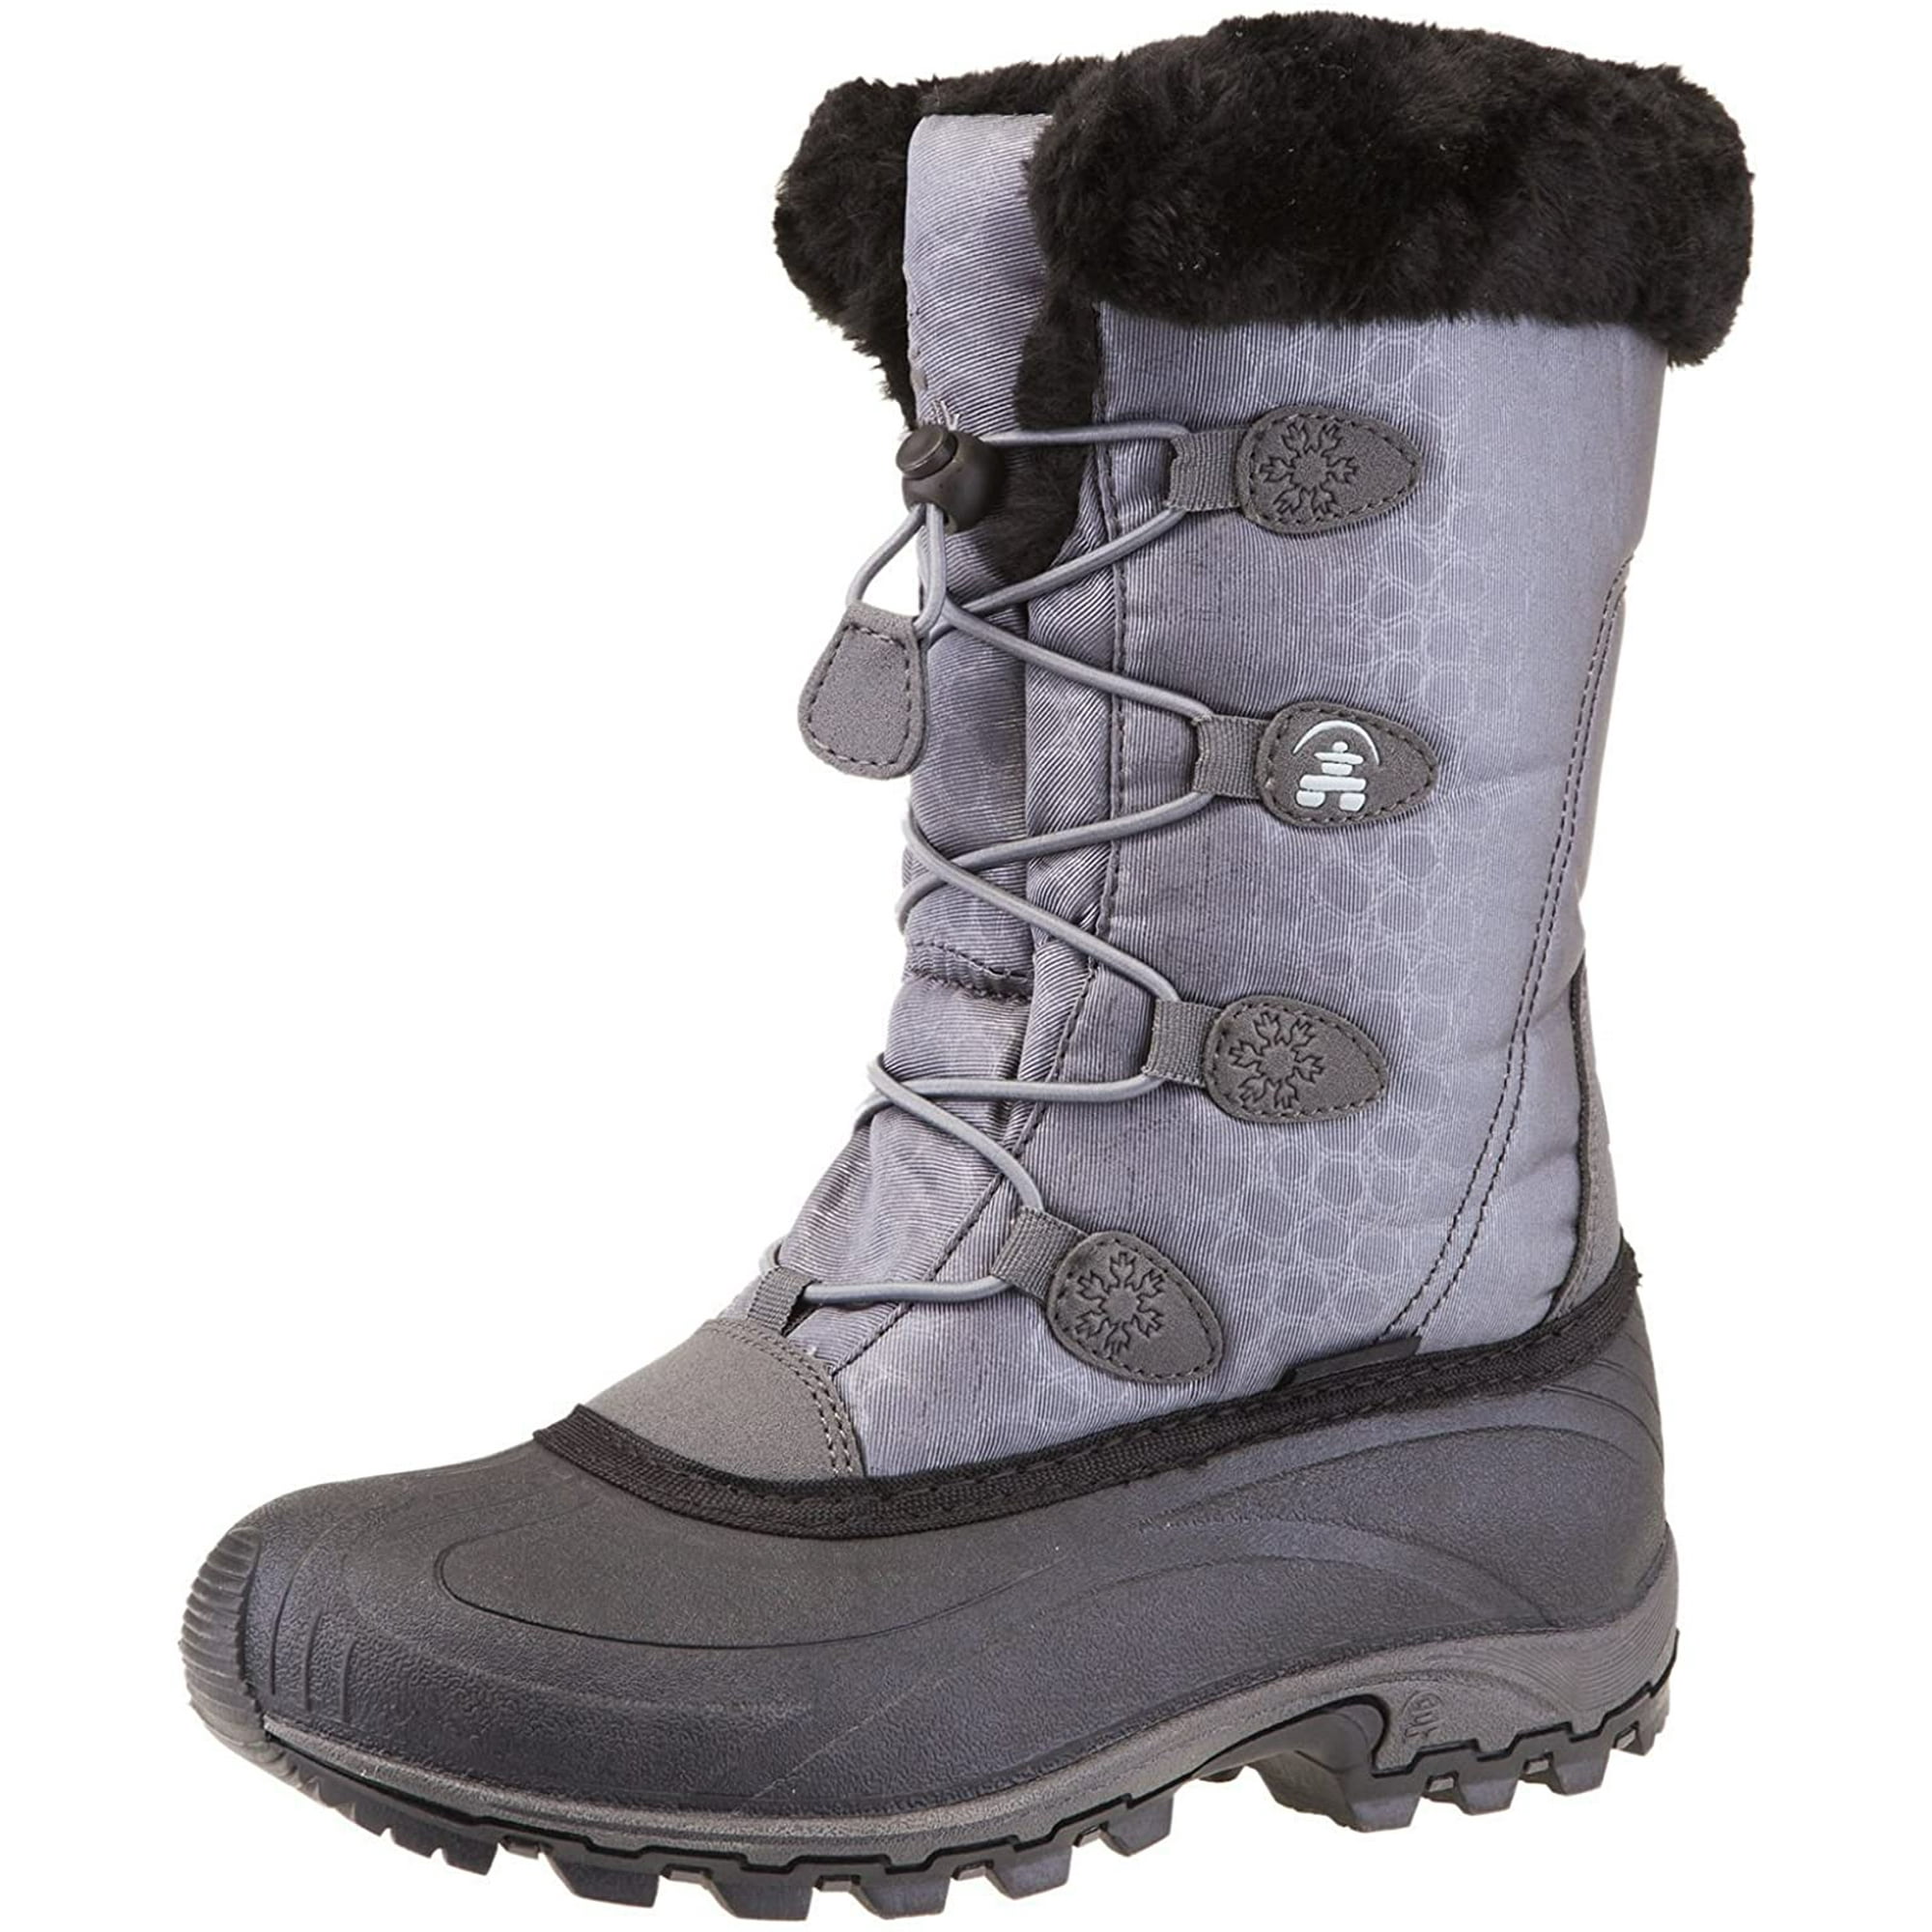 Kamik Women's Momentum Snow Boot (7 M US, Charcoal II) | Walmart Canada